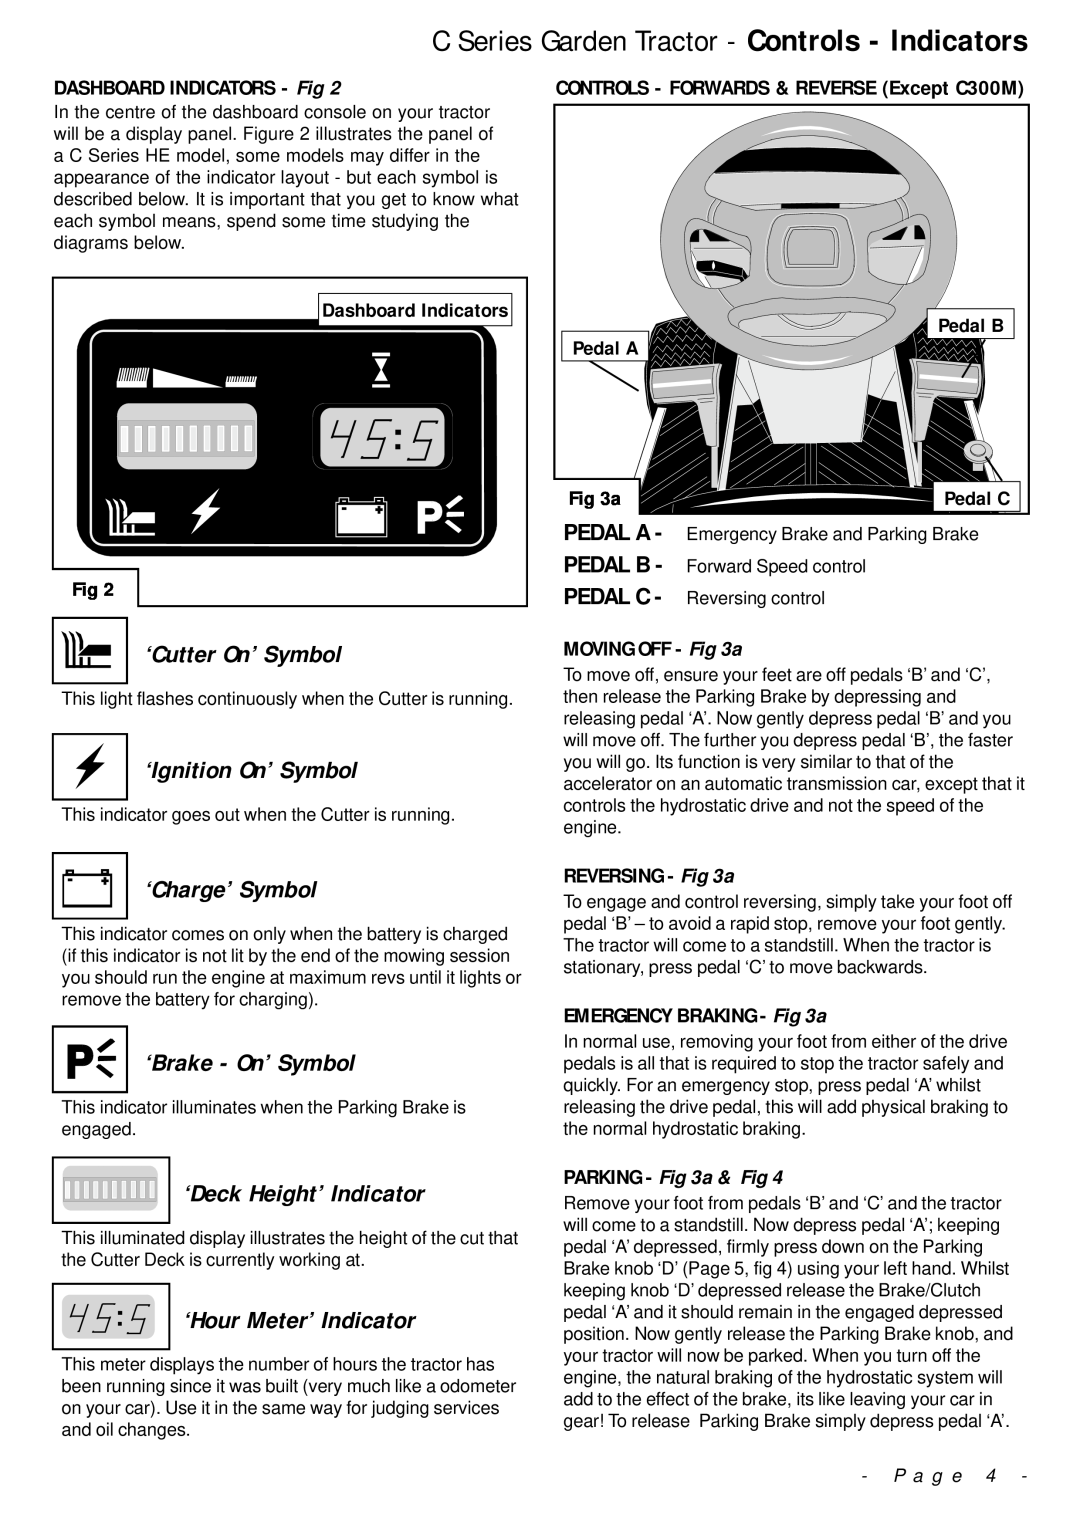 Countax C Series Garden Tractor - Controls - Indicators, DASHBOARD INDICATORS - Fig, Pedal A, MOVING OFF - a, P a g e 